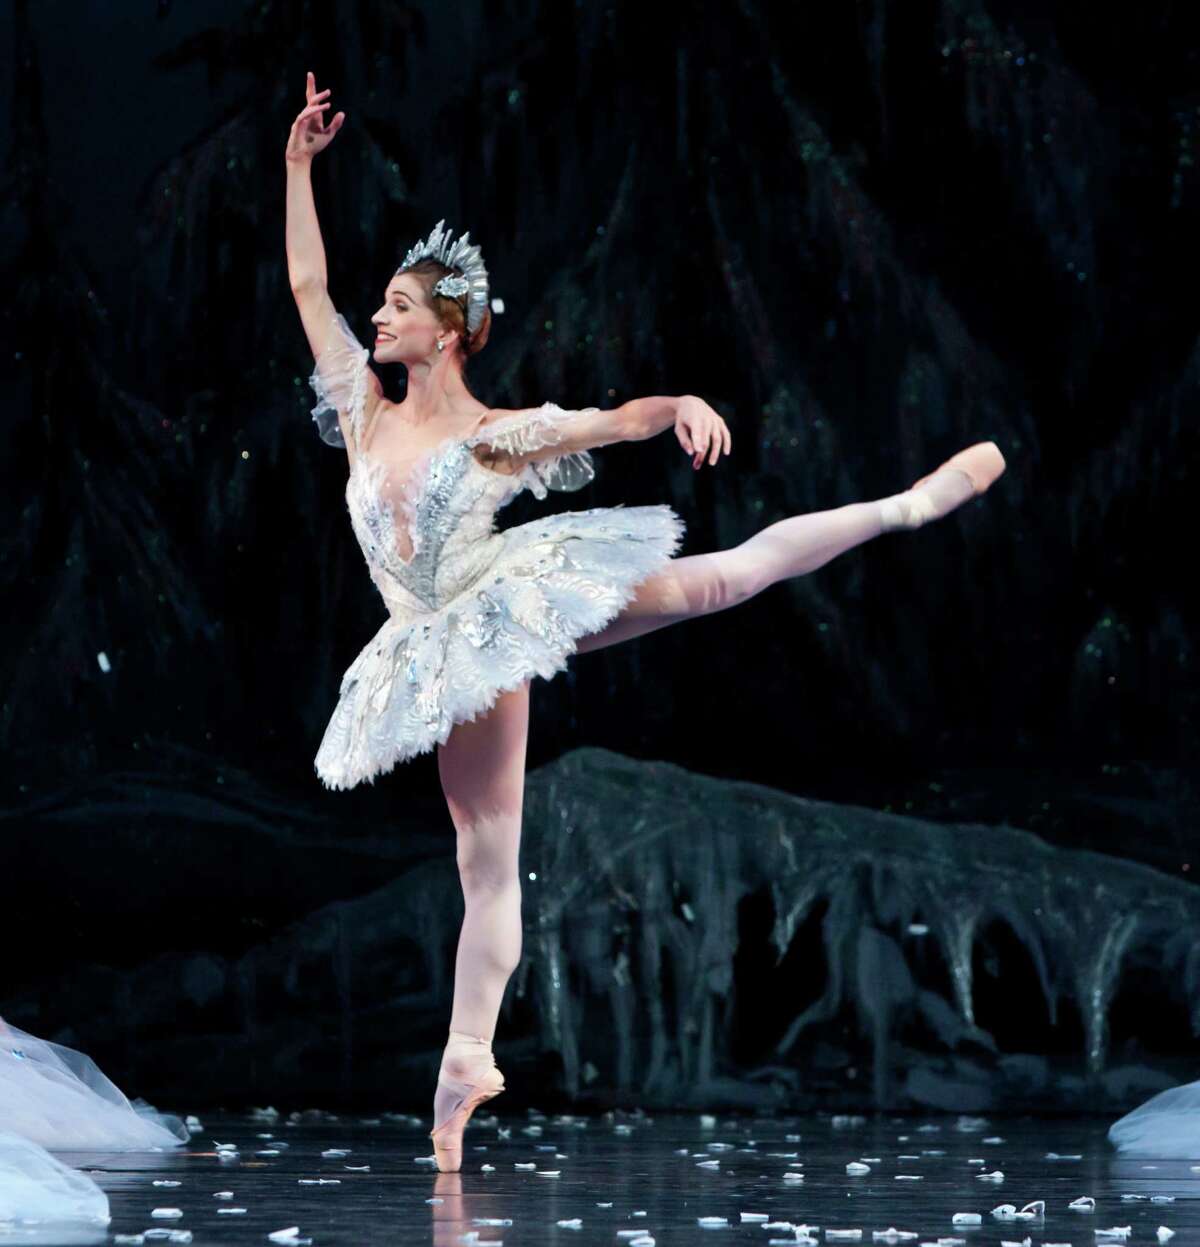 The Houston Ballet's "The Nutcracker" will continue through Sunday.